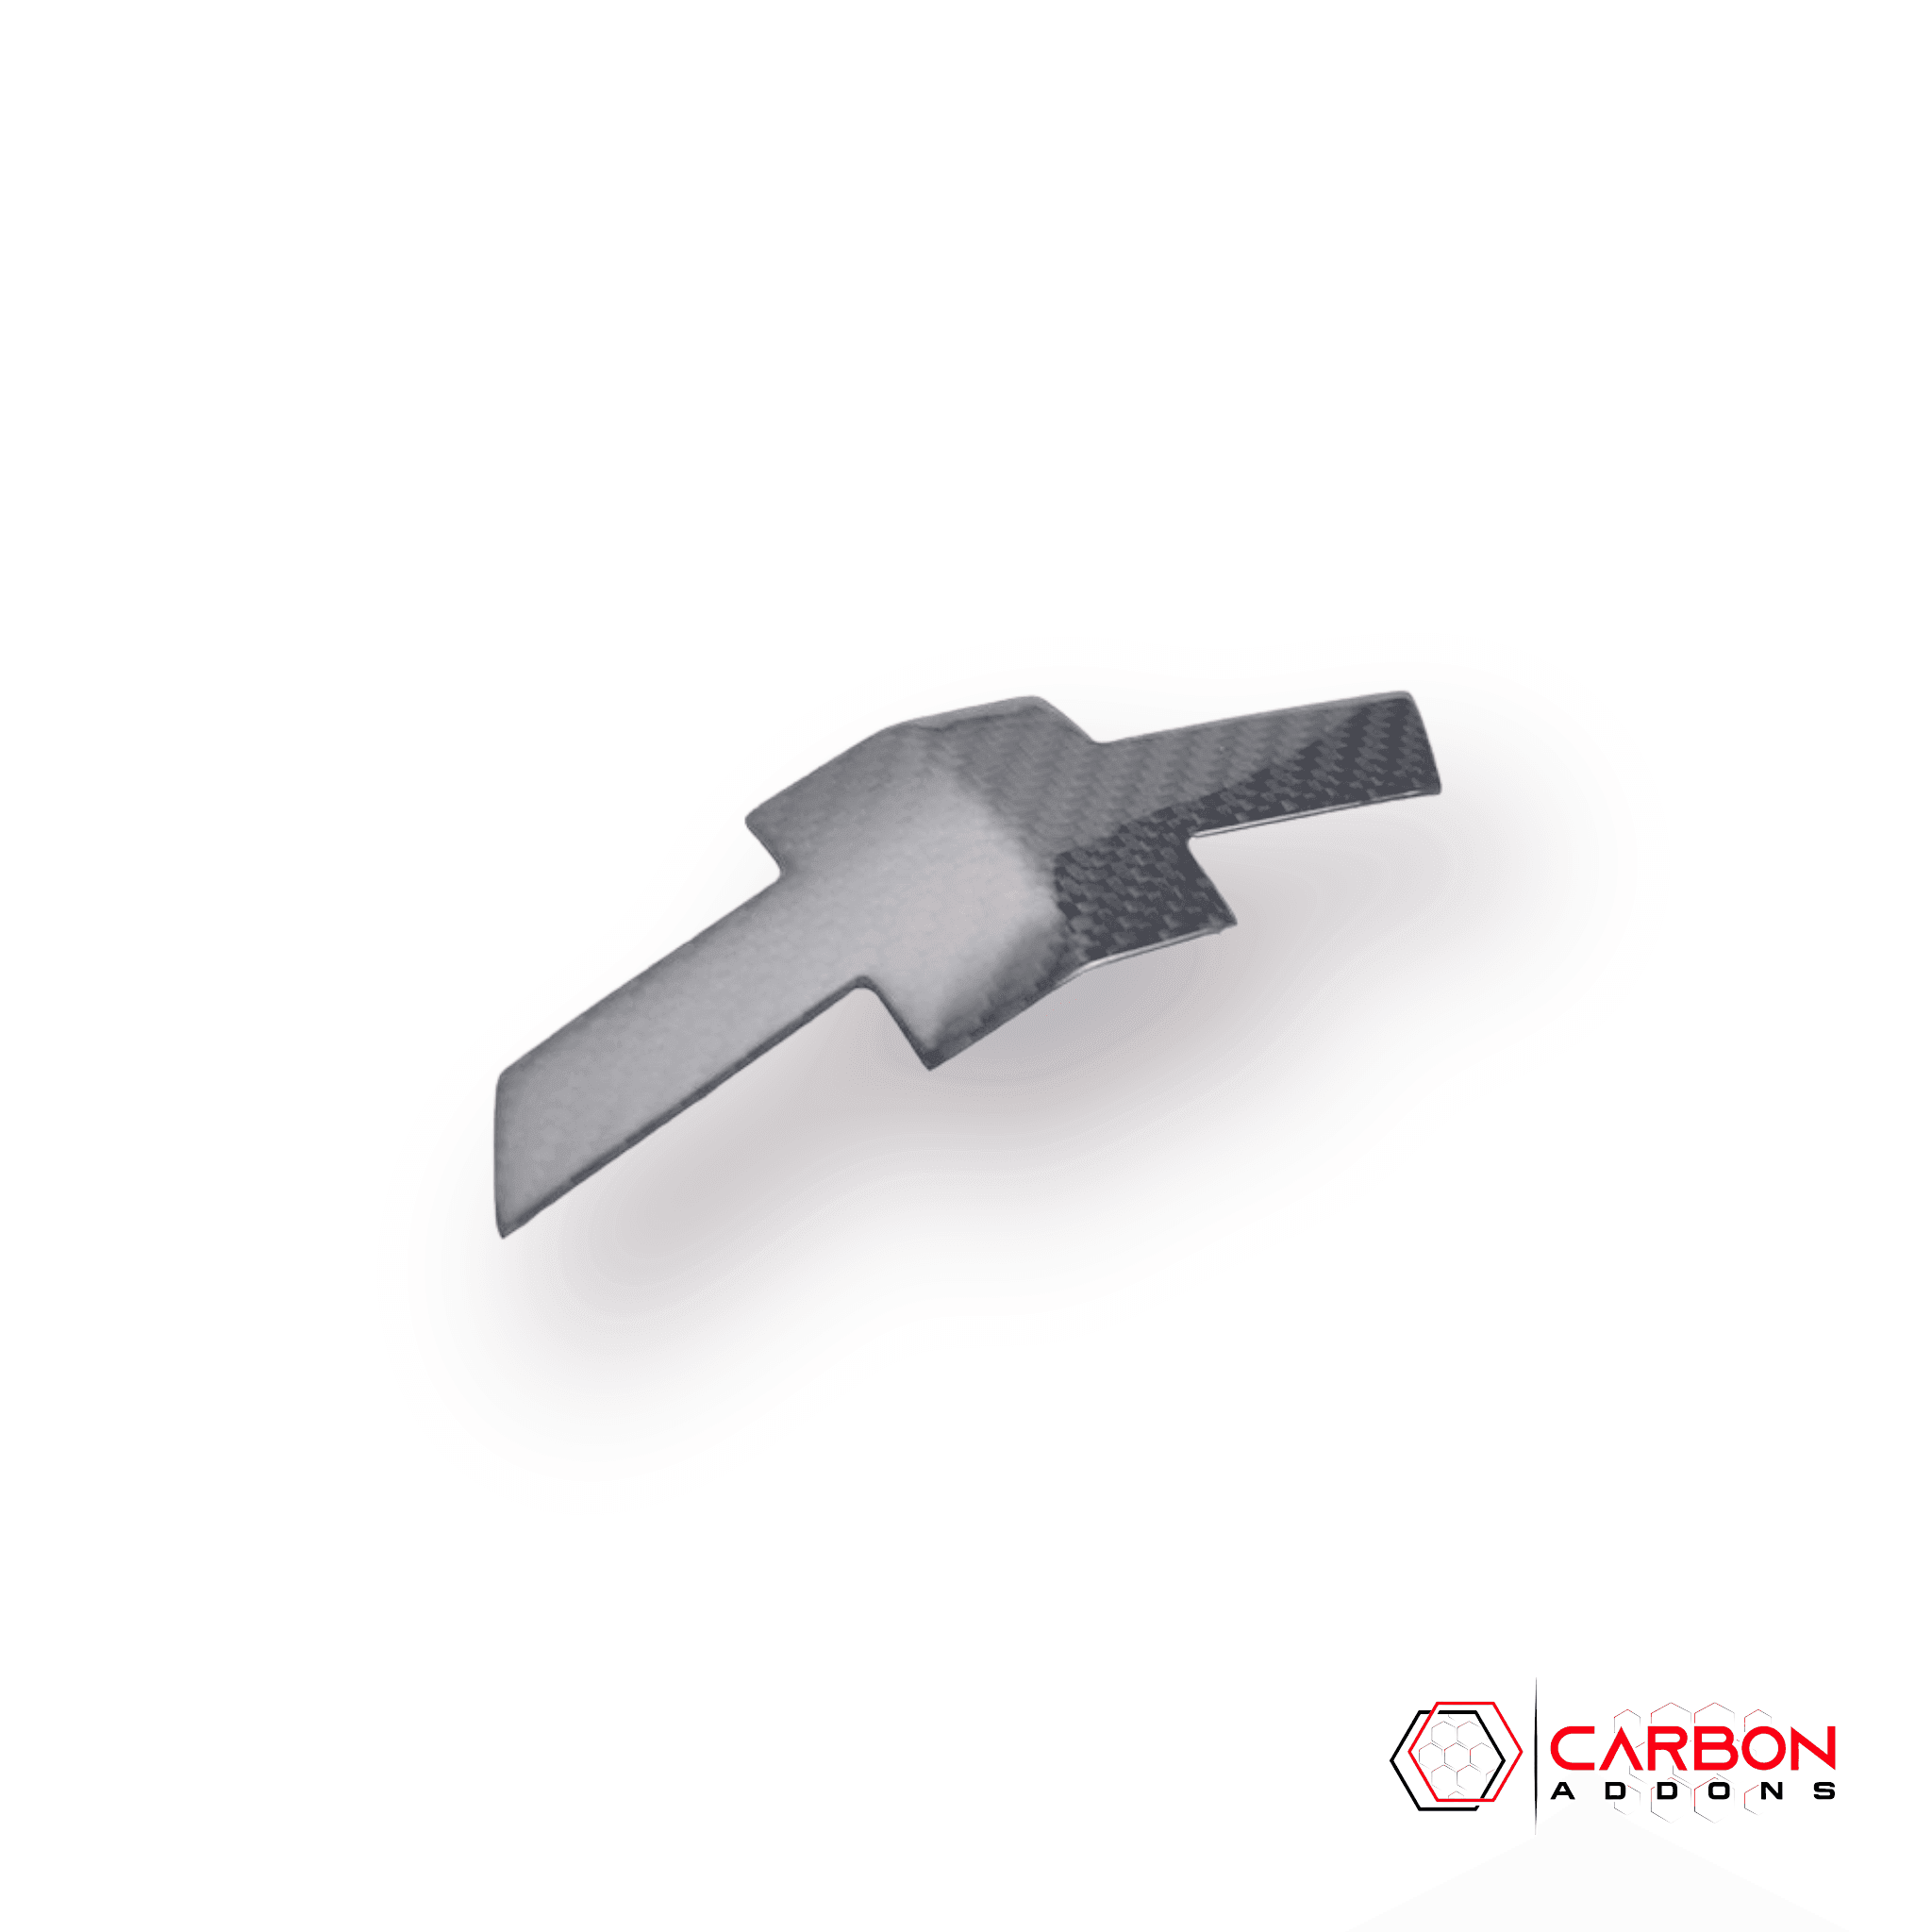 2016-2024 Camaro Carbon Fiber Exterior Bow tie Covers - carbonaddons Carbon Fiber Parts, Accessories, Upgrades, Mods